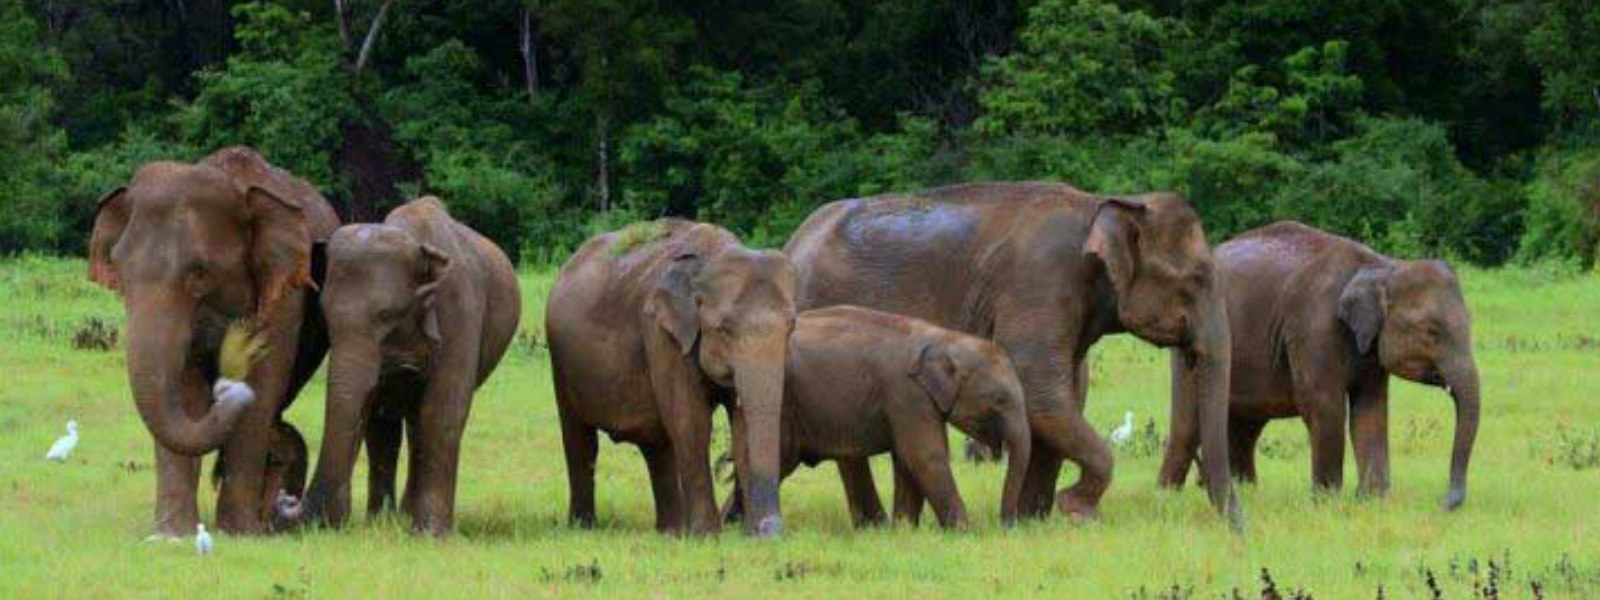 Elephant survey postponed due to rain